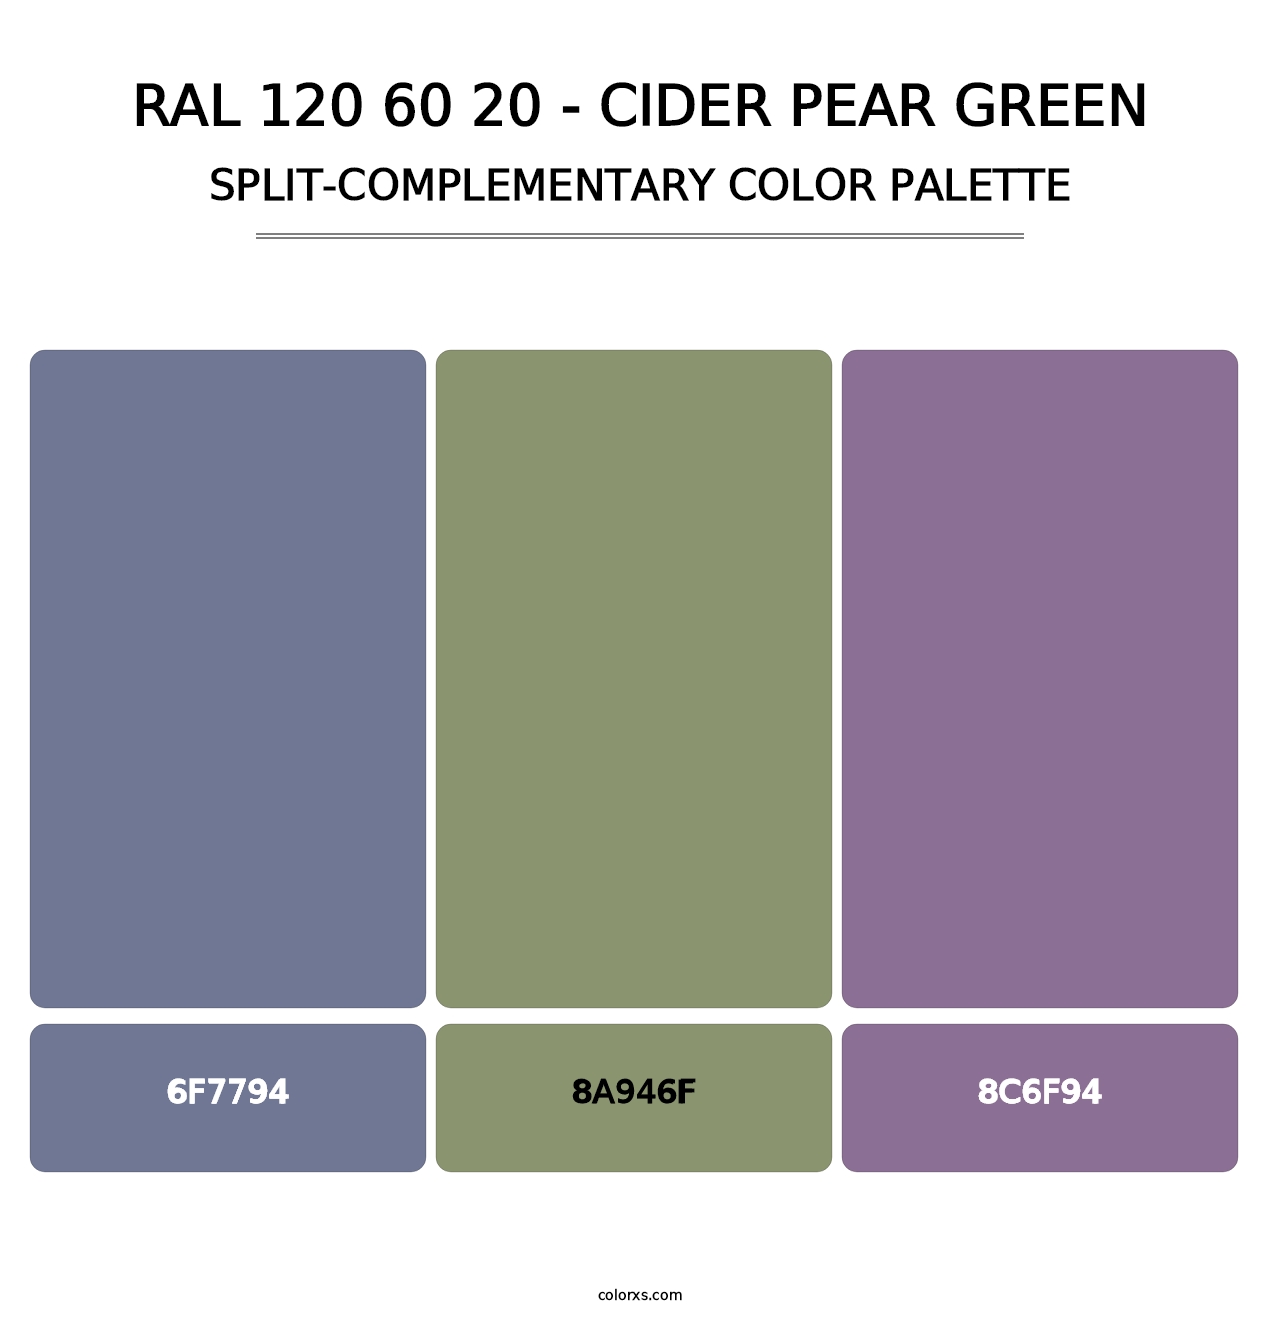 RAL 120 60 20 - Cider Pear Green - Split-Complementary Color Palette